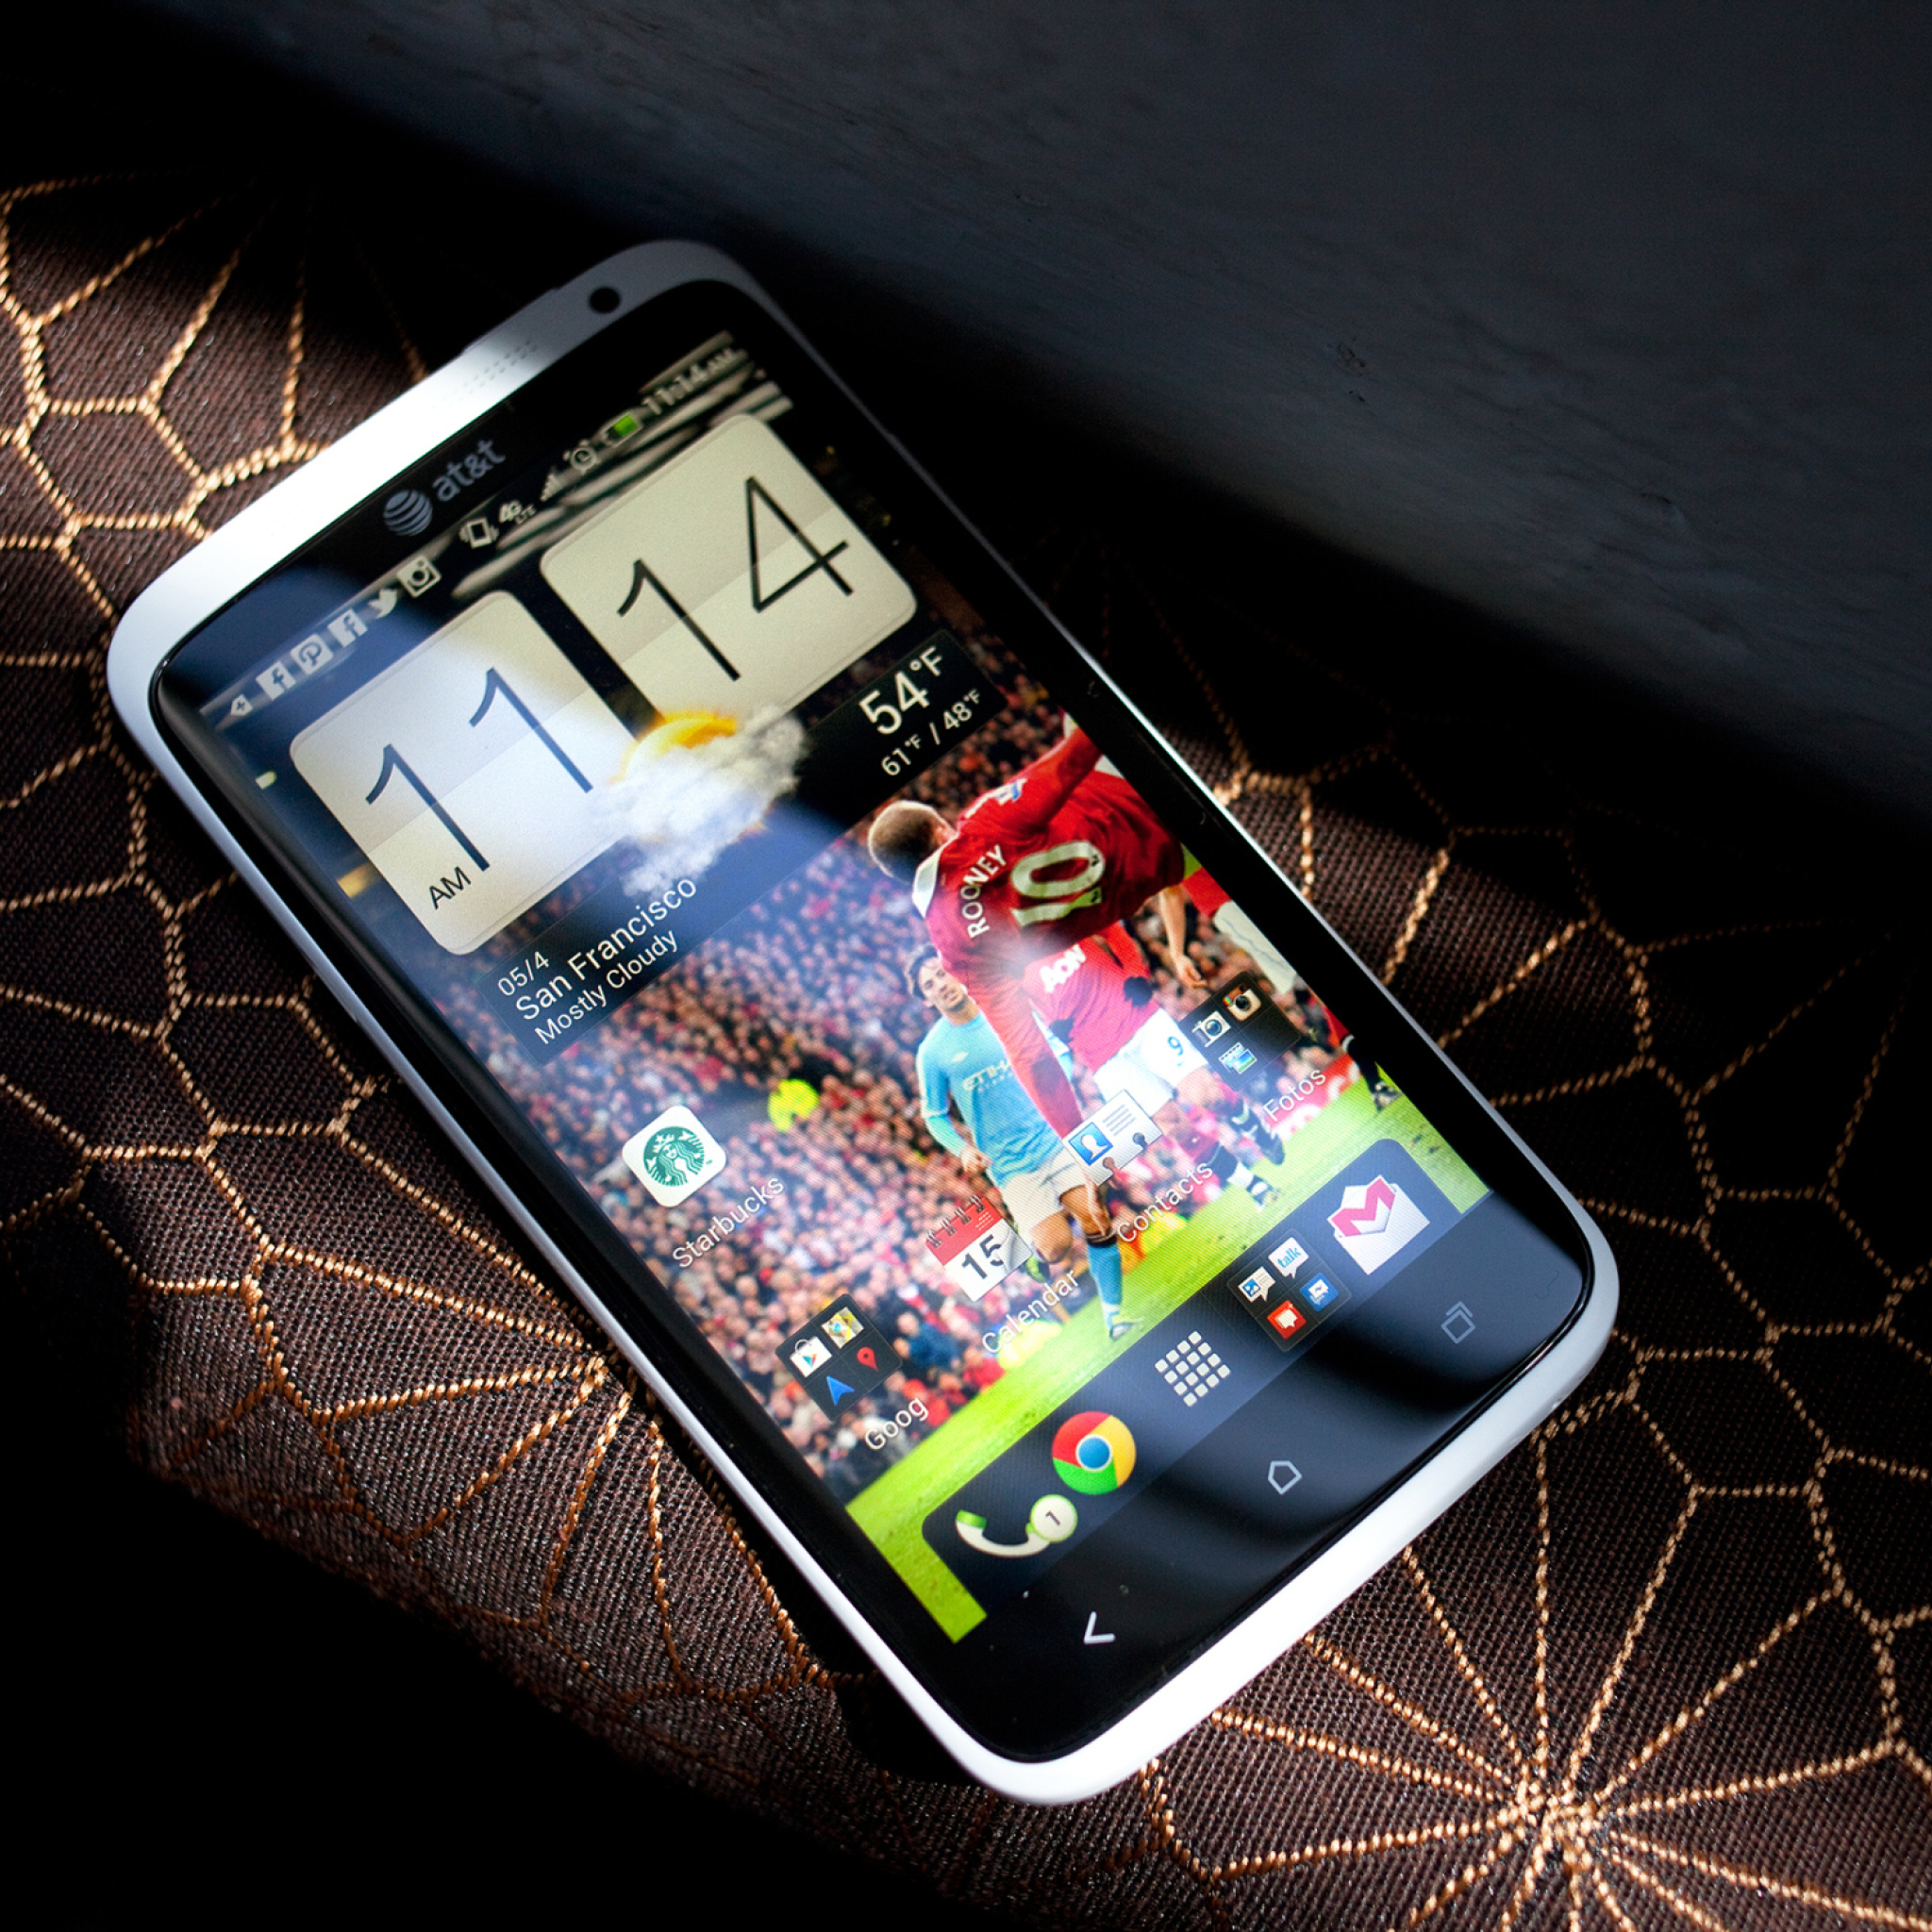 HTC One X - Smartphone wallpaper 2048x2048